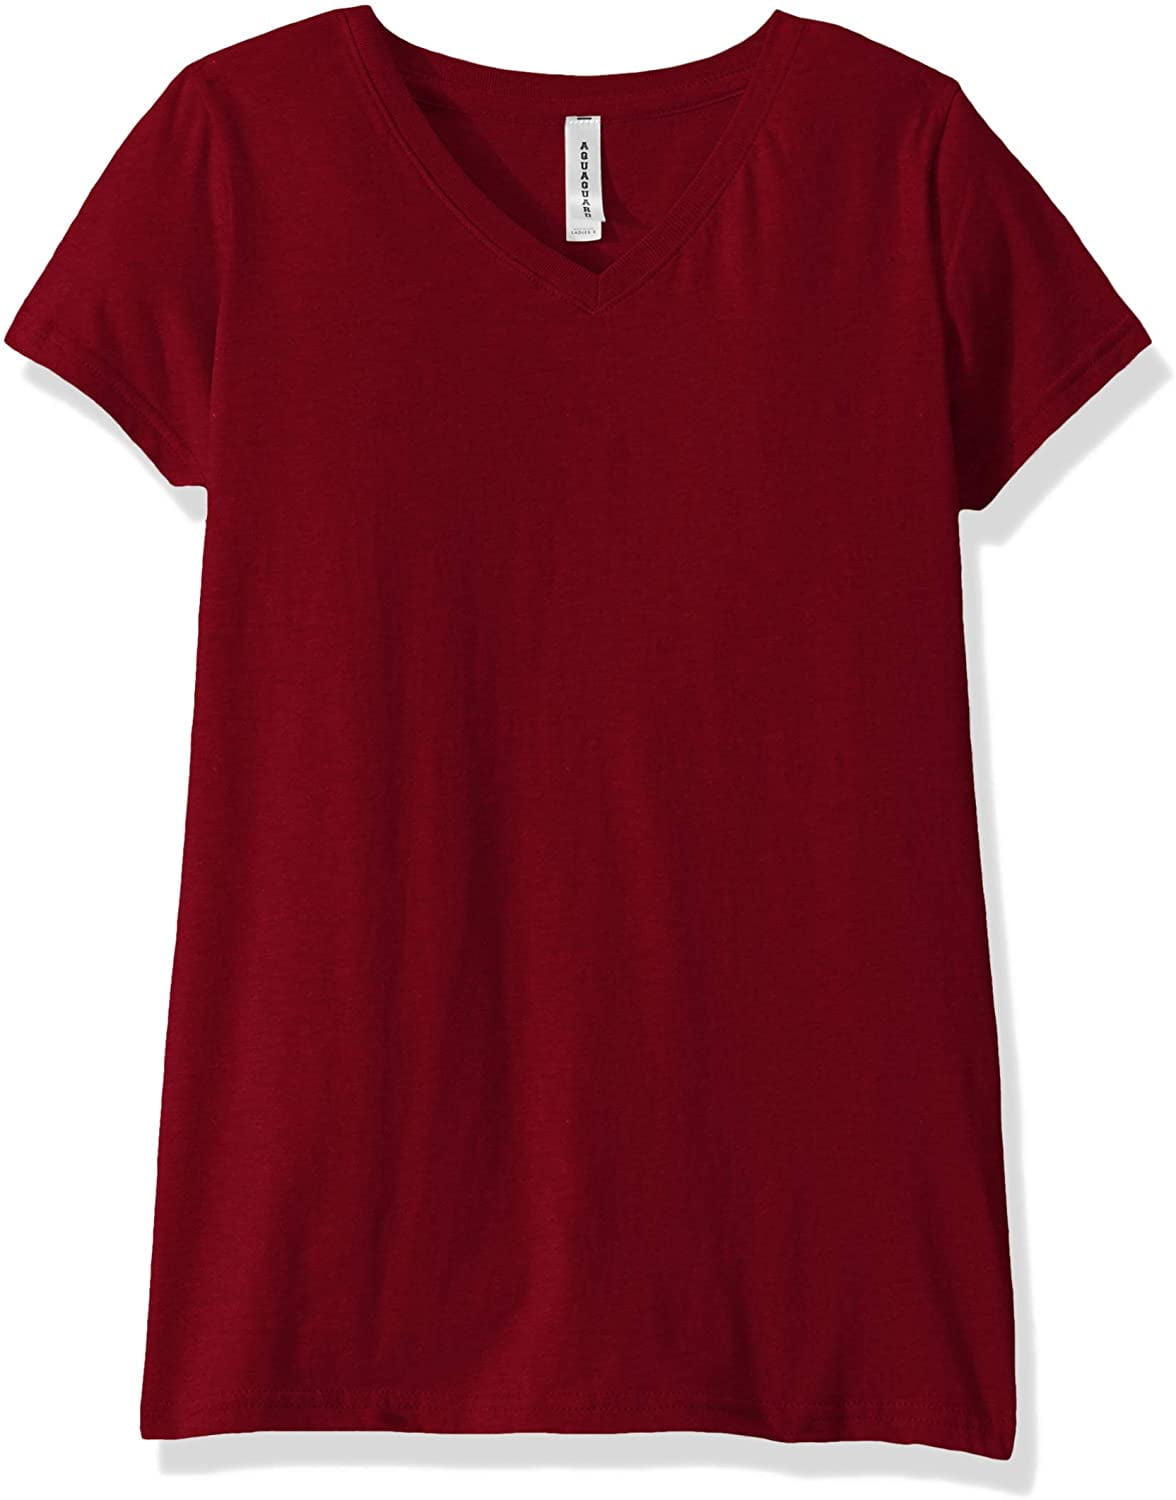 AquaGuard Womens Fine Jersey V-Neck Longer Length T-Shirt-3 Pack 